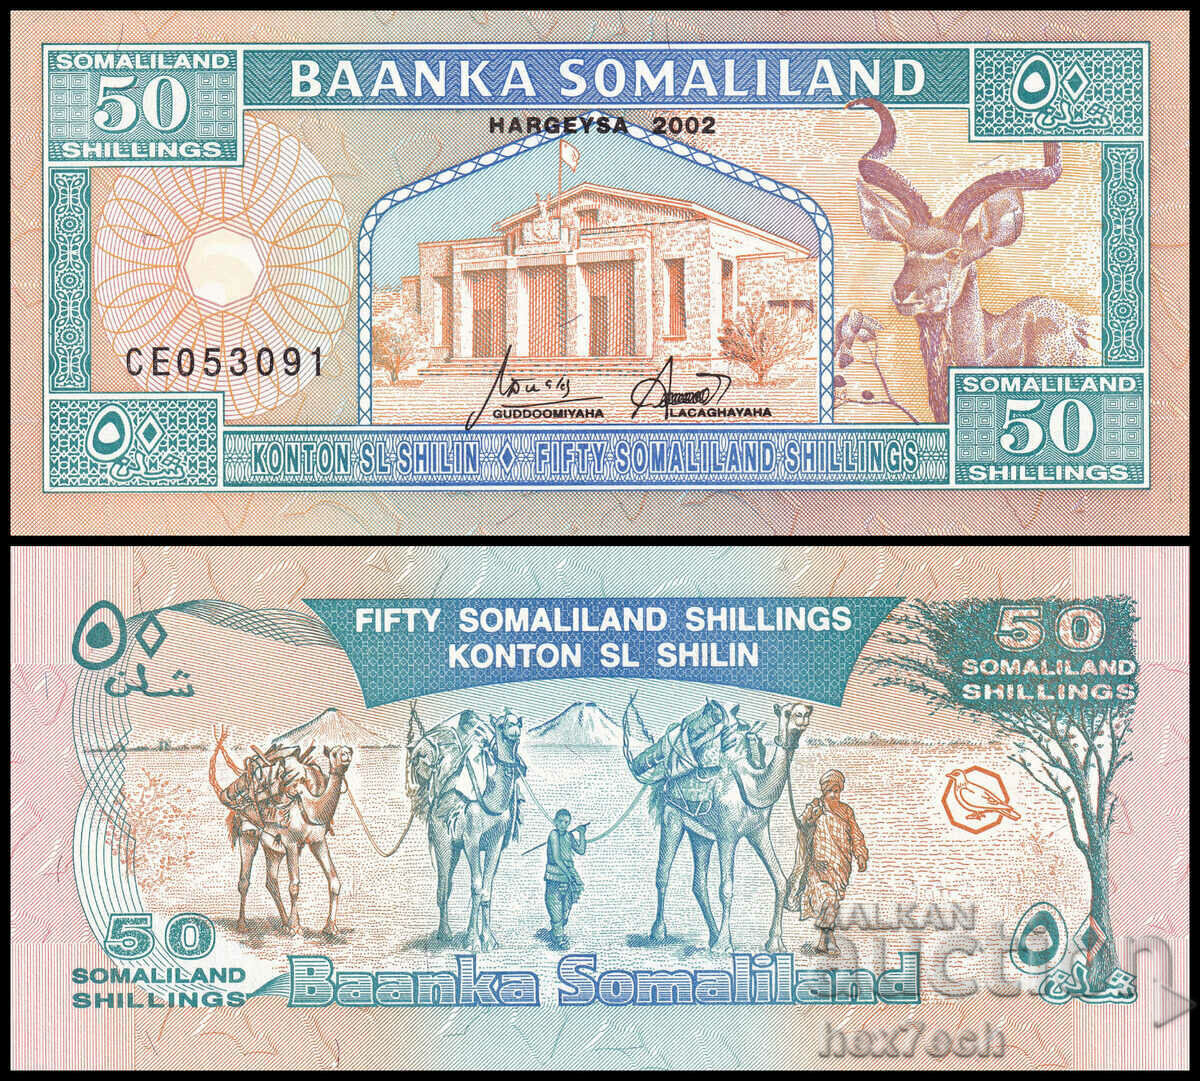 ❤️ ⭐ Somaliland 2002 50 shillings UNC new ⭐ ❤️